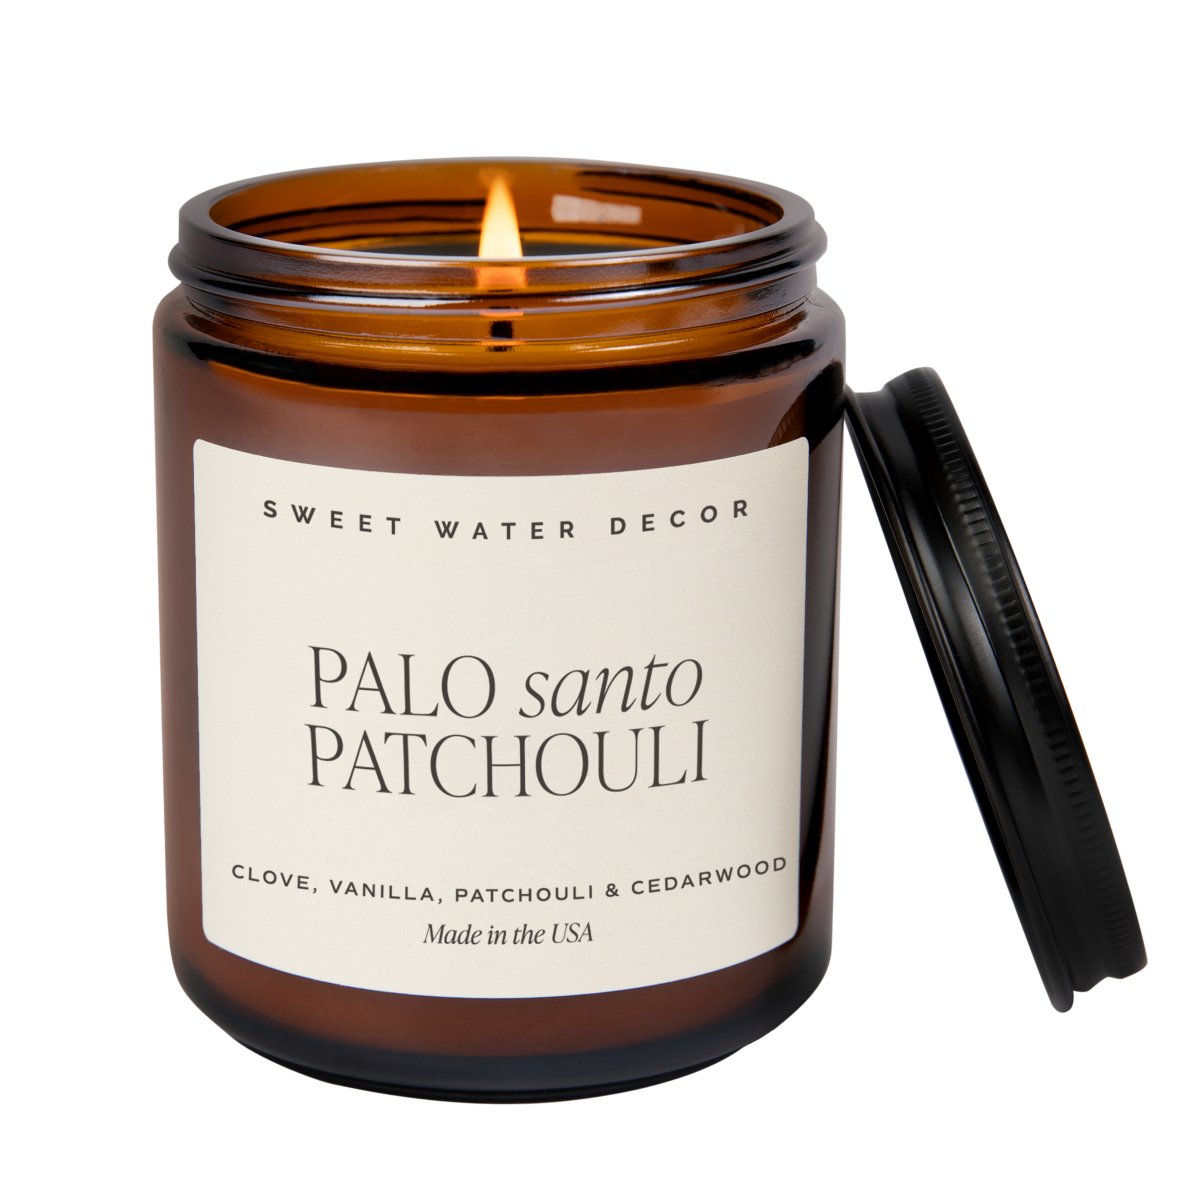 Sweet Water Decor Palo Santo Patchouli Soy Candle - Amber Jar - 9 oz - lily & onyx